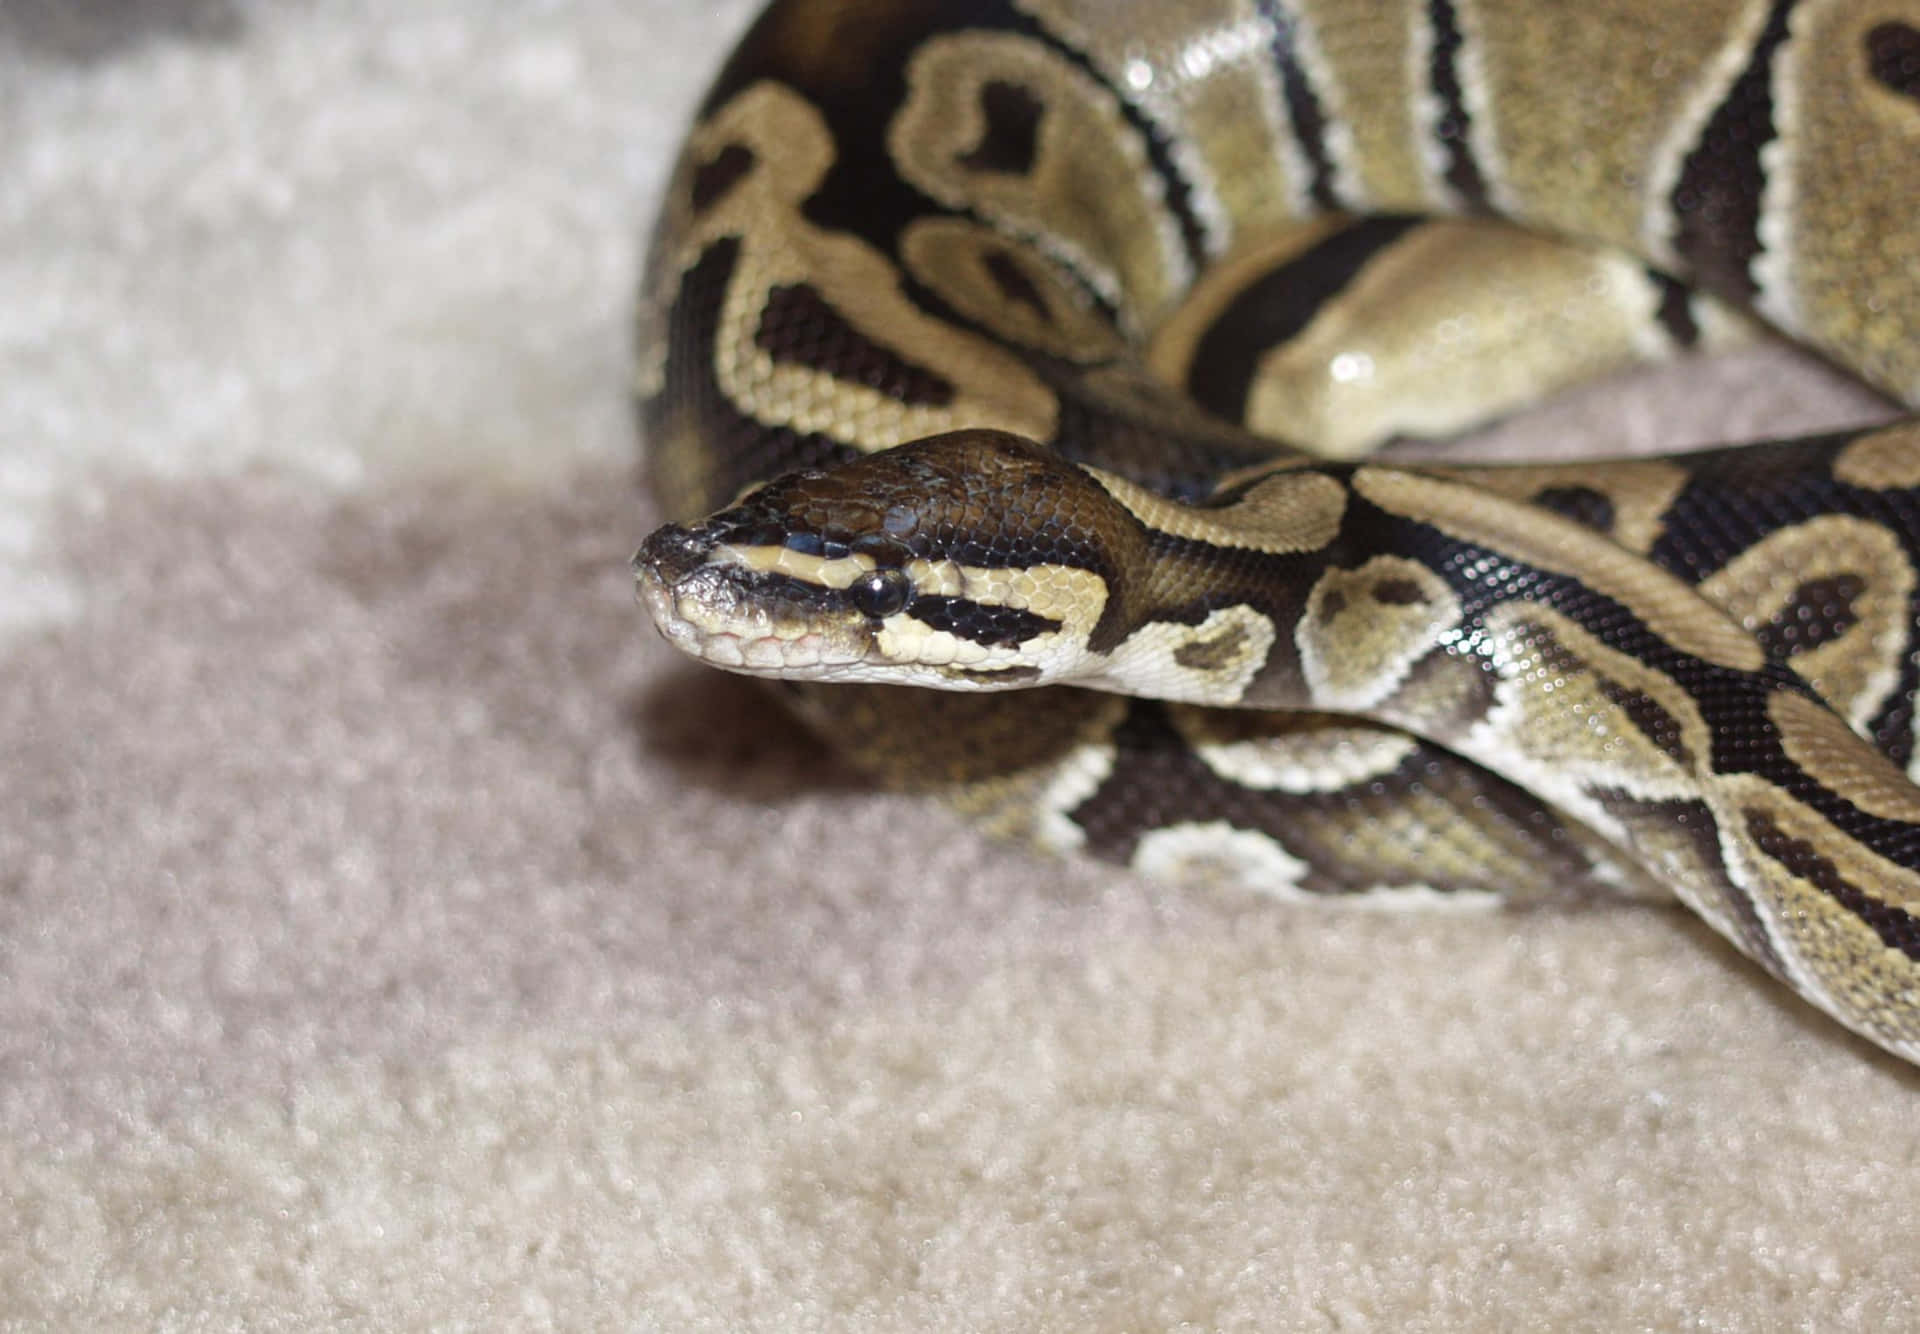 A Large Ball Python On A Carpet